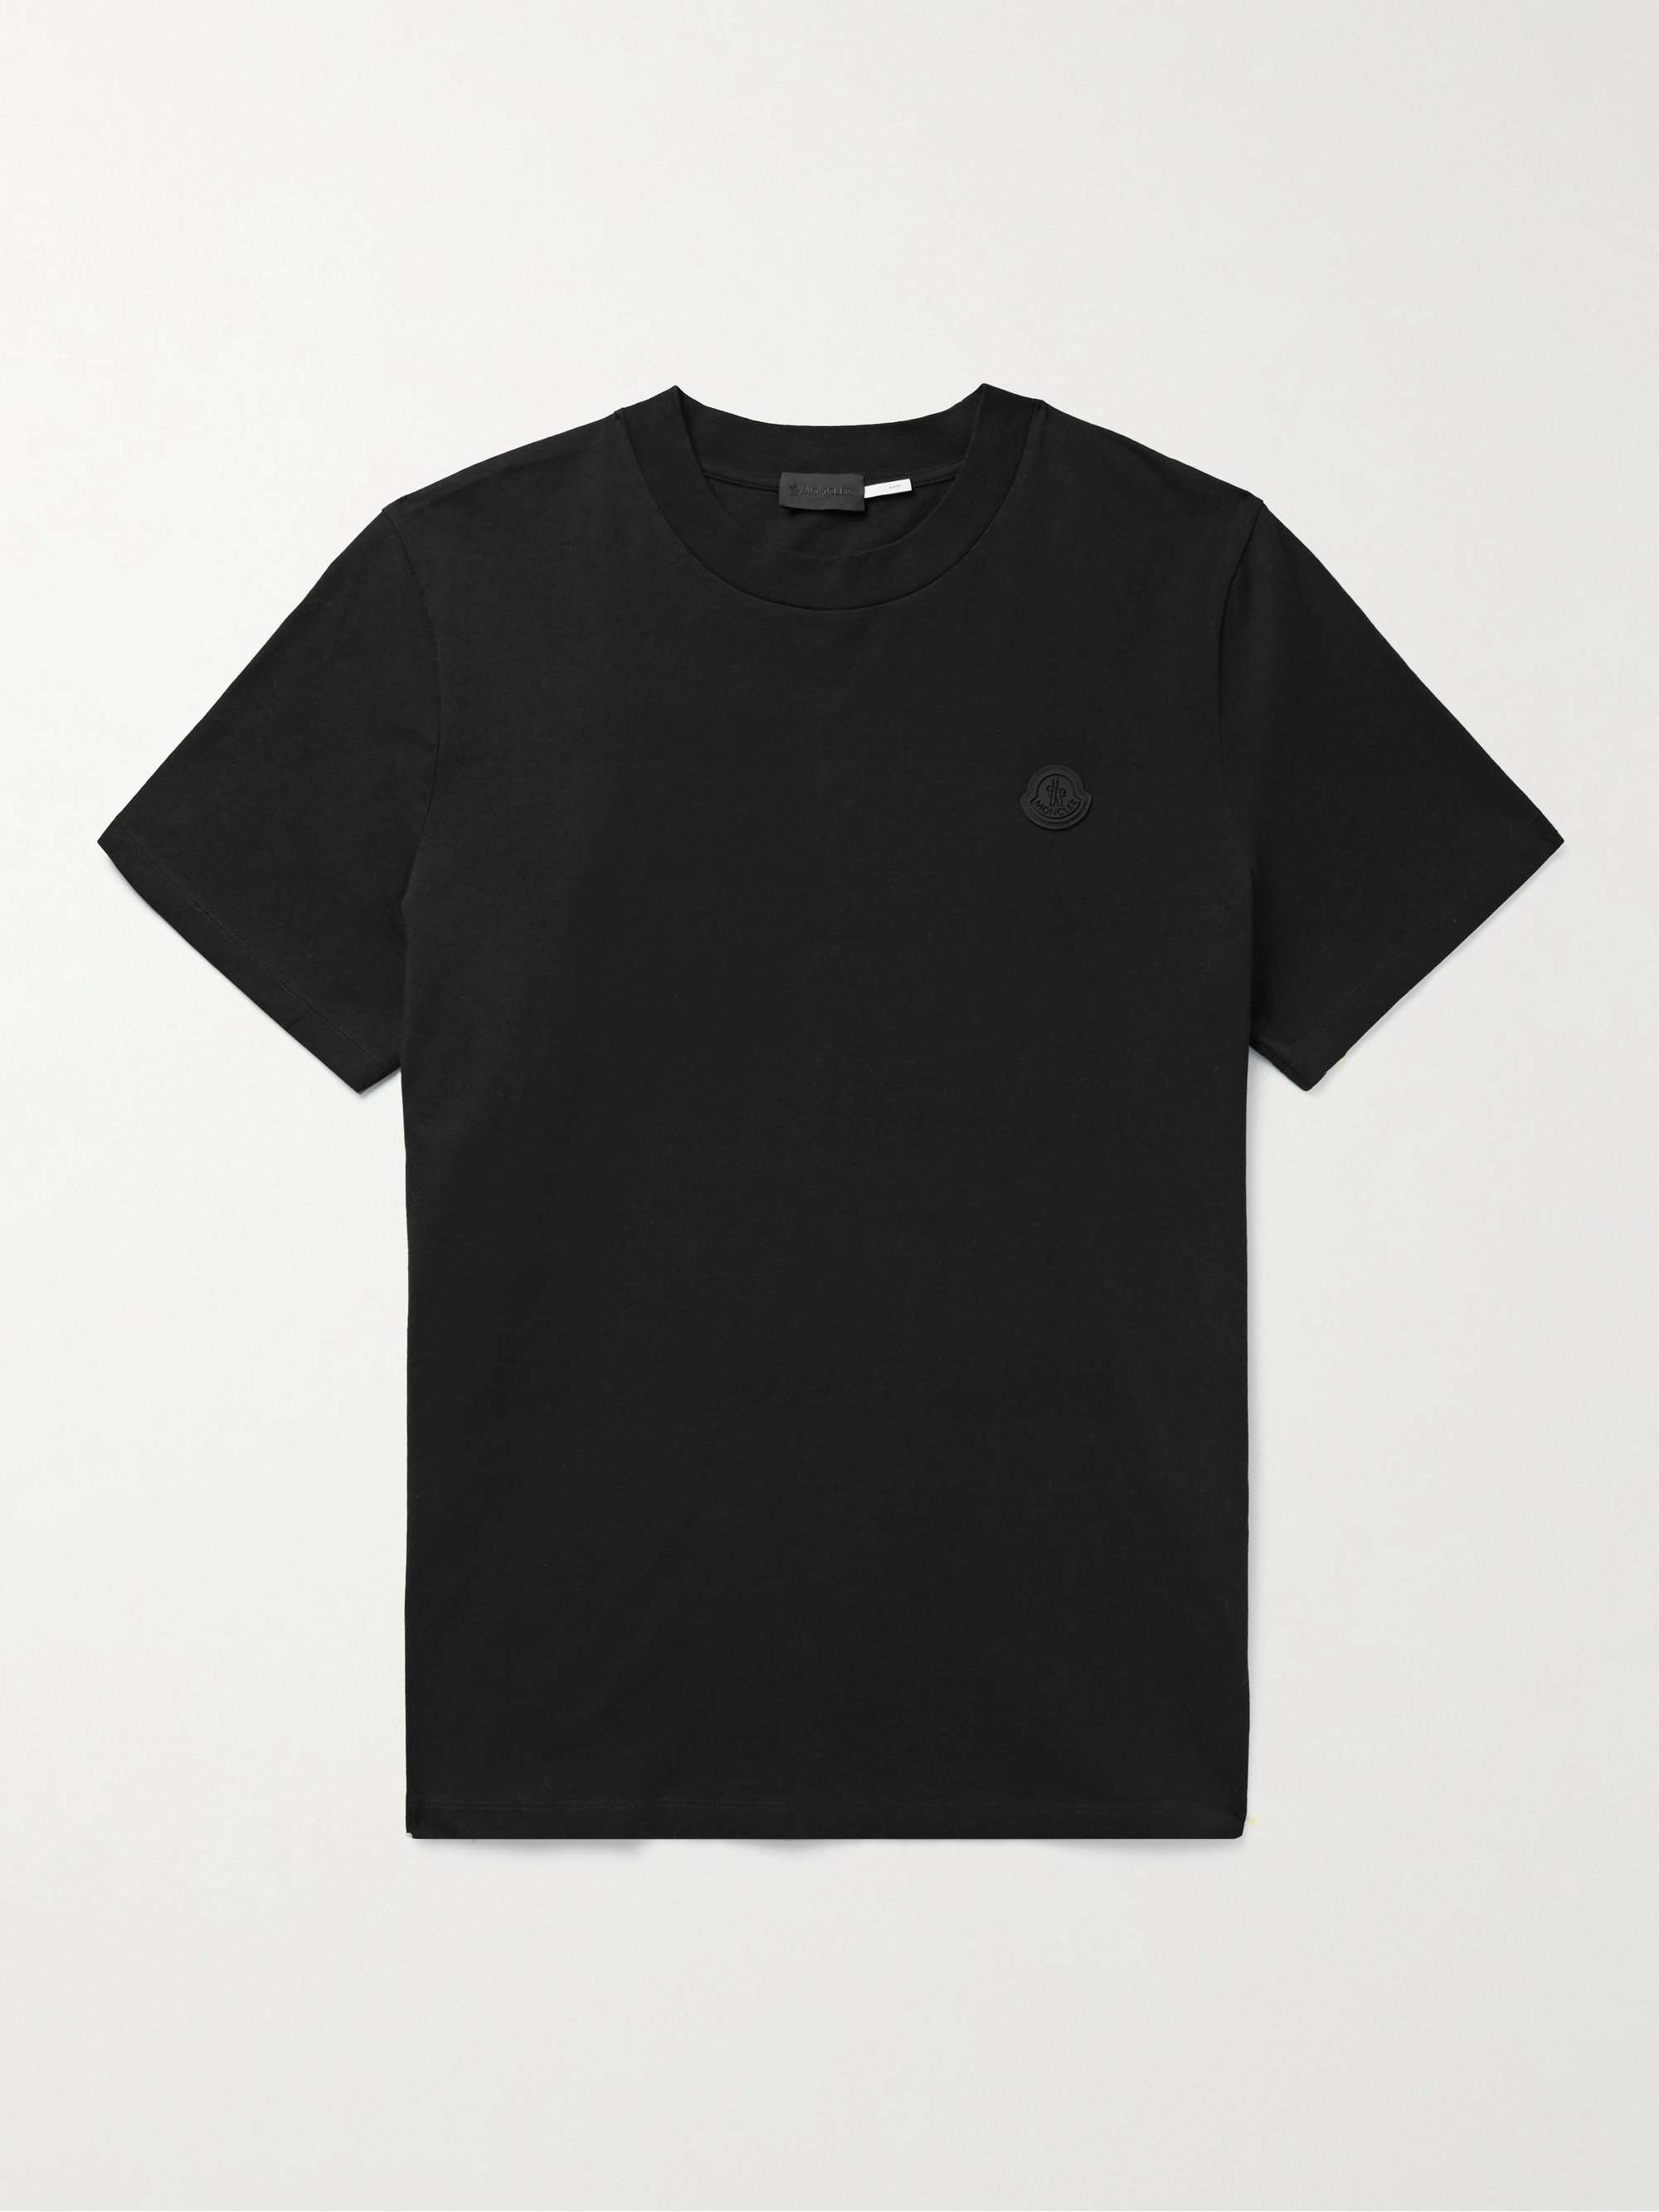 Moncler Logo-Appliquéd Printed Cotton-jersey T-Shirt - Men - Black T-shirts - M